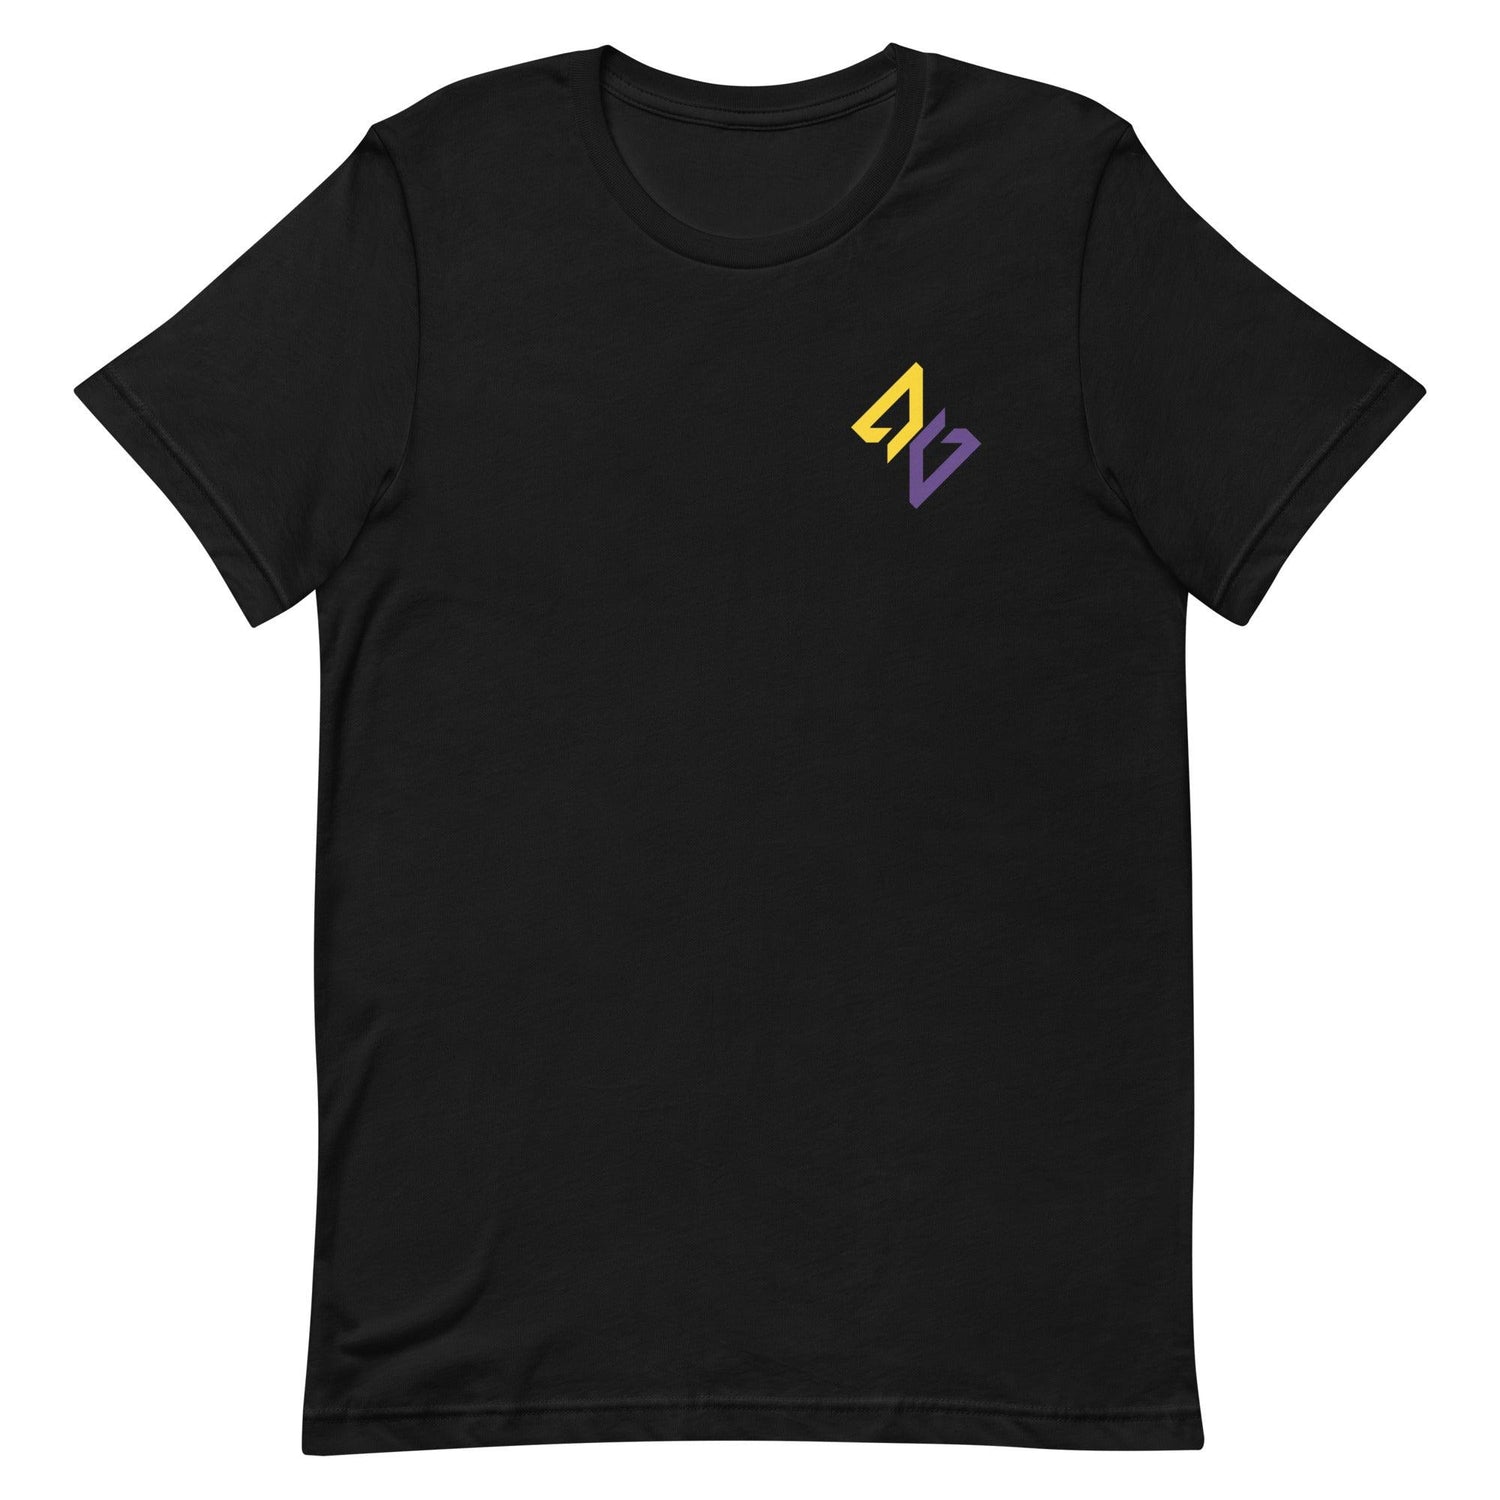 Armoni Goodwin "Essential" t-shirt - Fan Arch